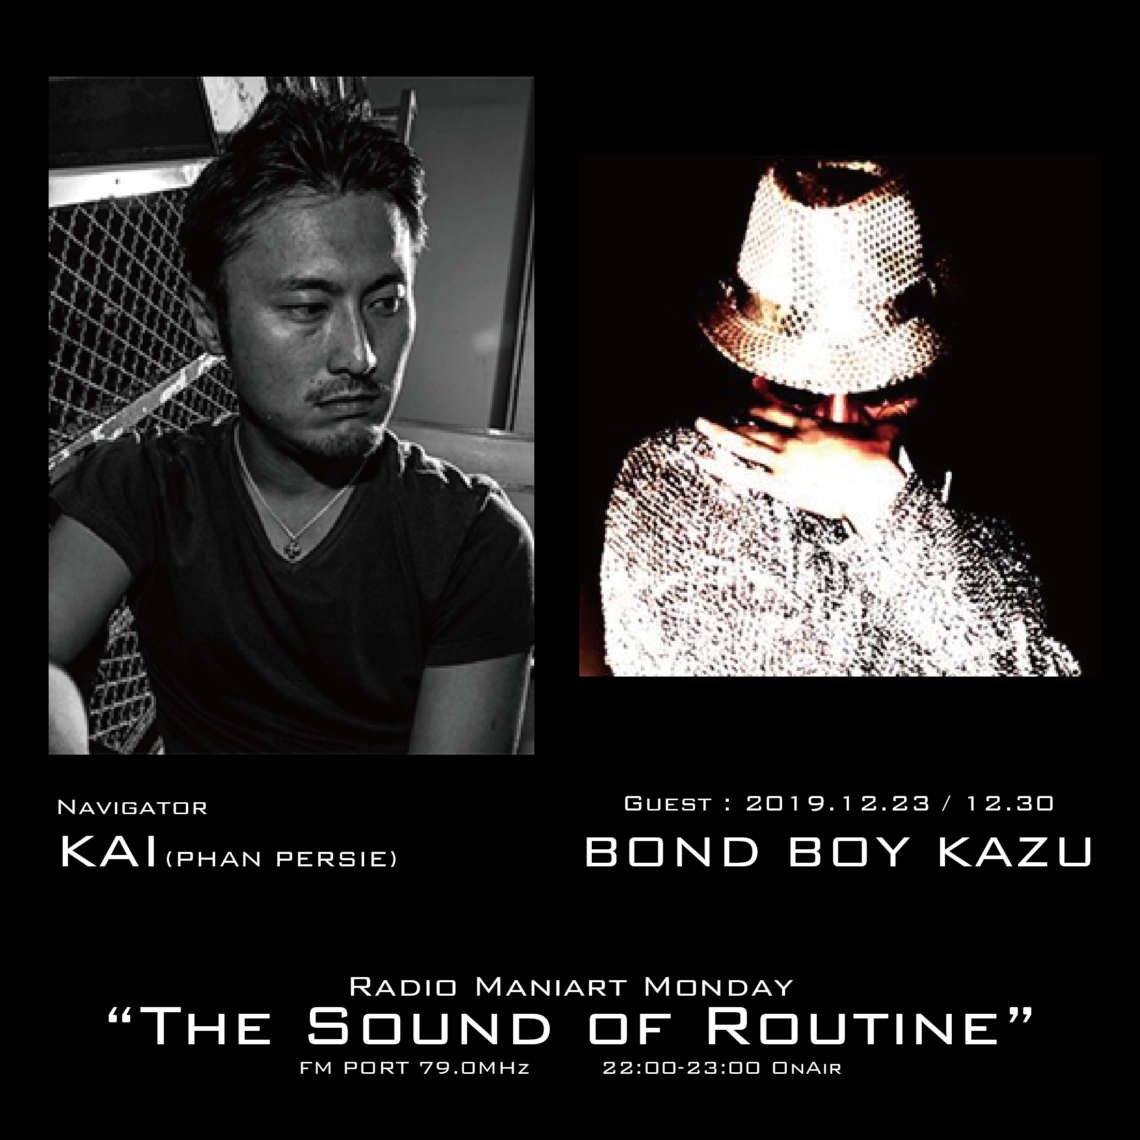 2019. 12. 23 MON, 12. 30 MON – KAI : Navigator on FM PORT / the Sound of Routine – Guest : BOND BOY KAZU